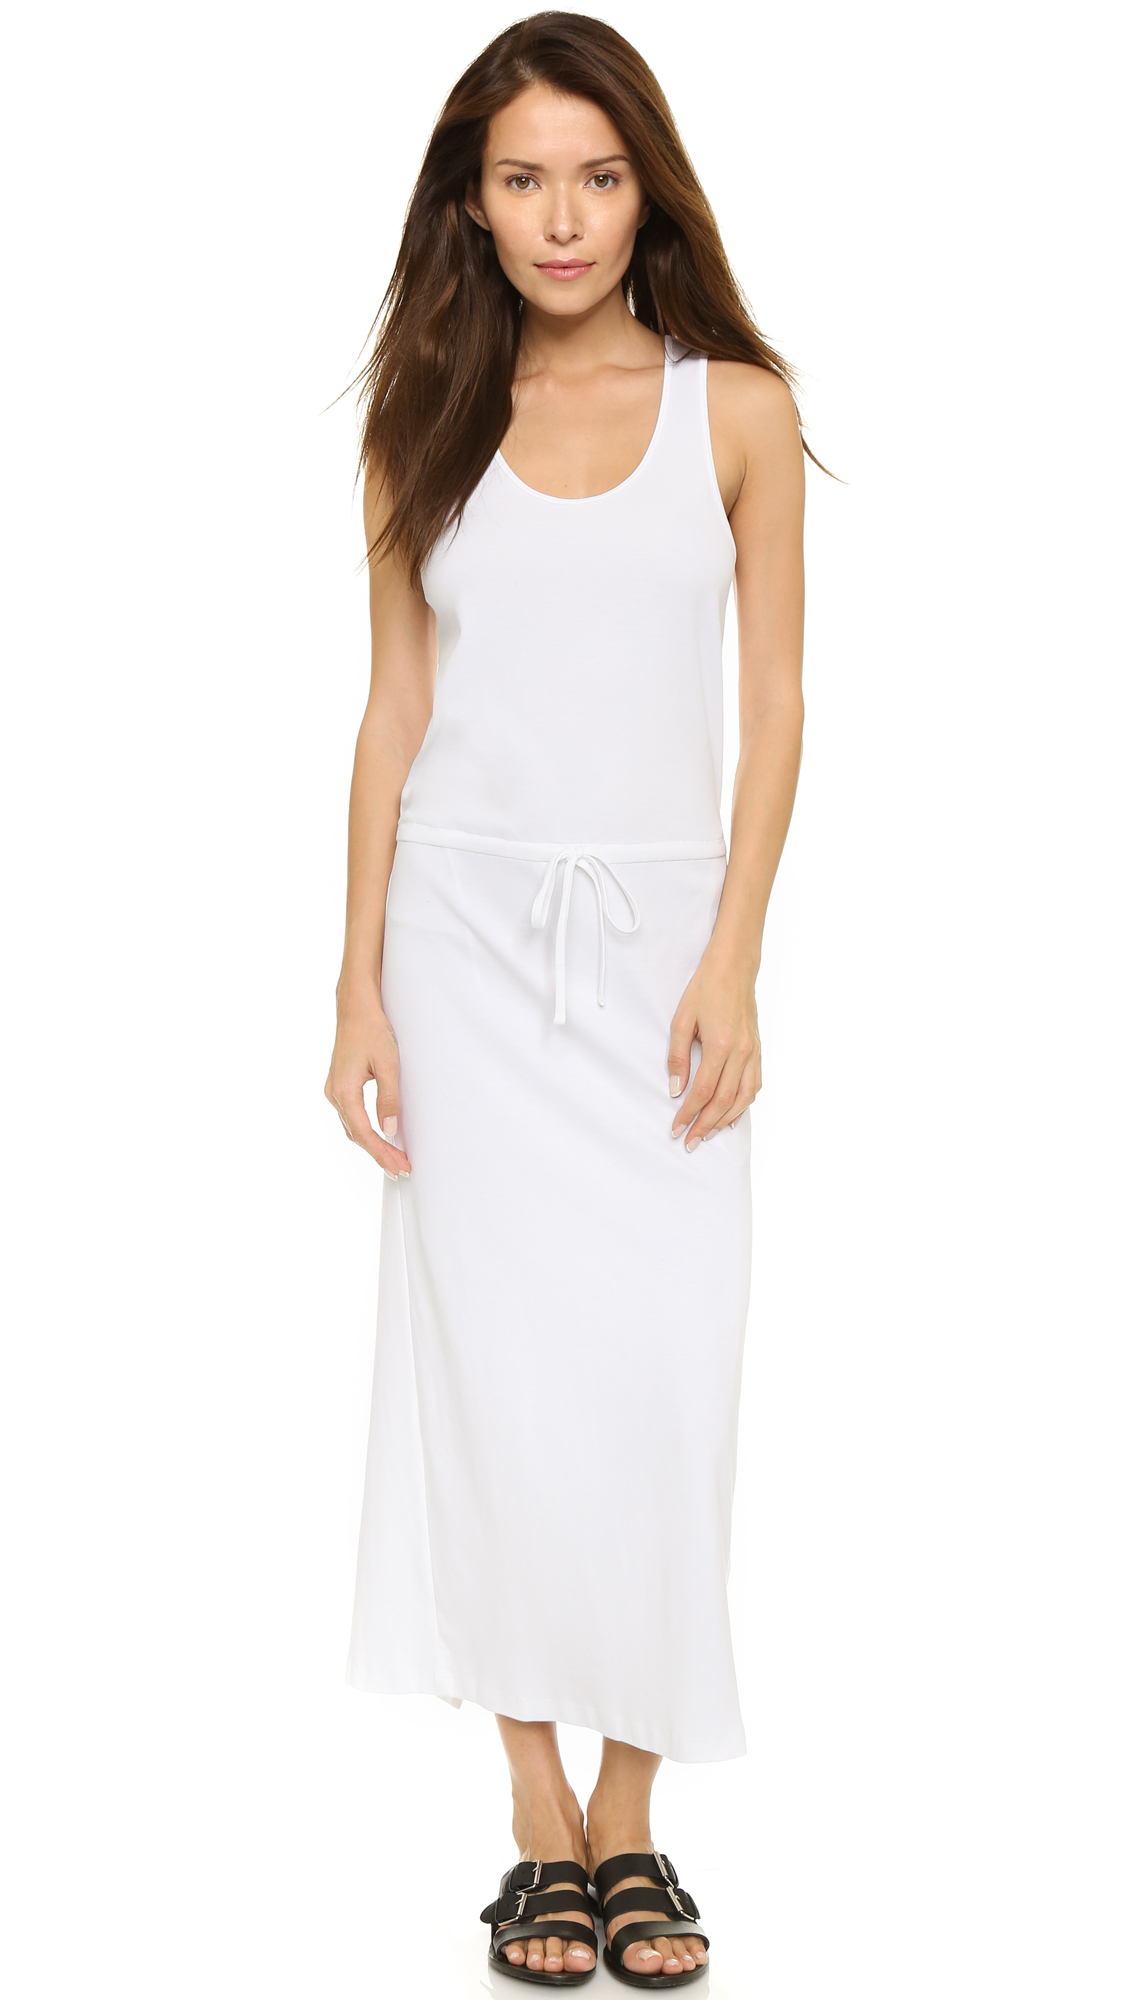 theory white dress - Dress Yp